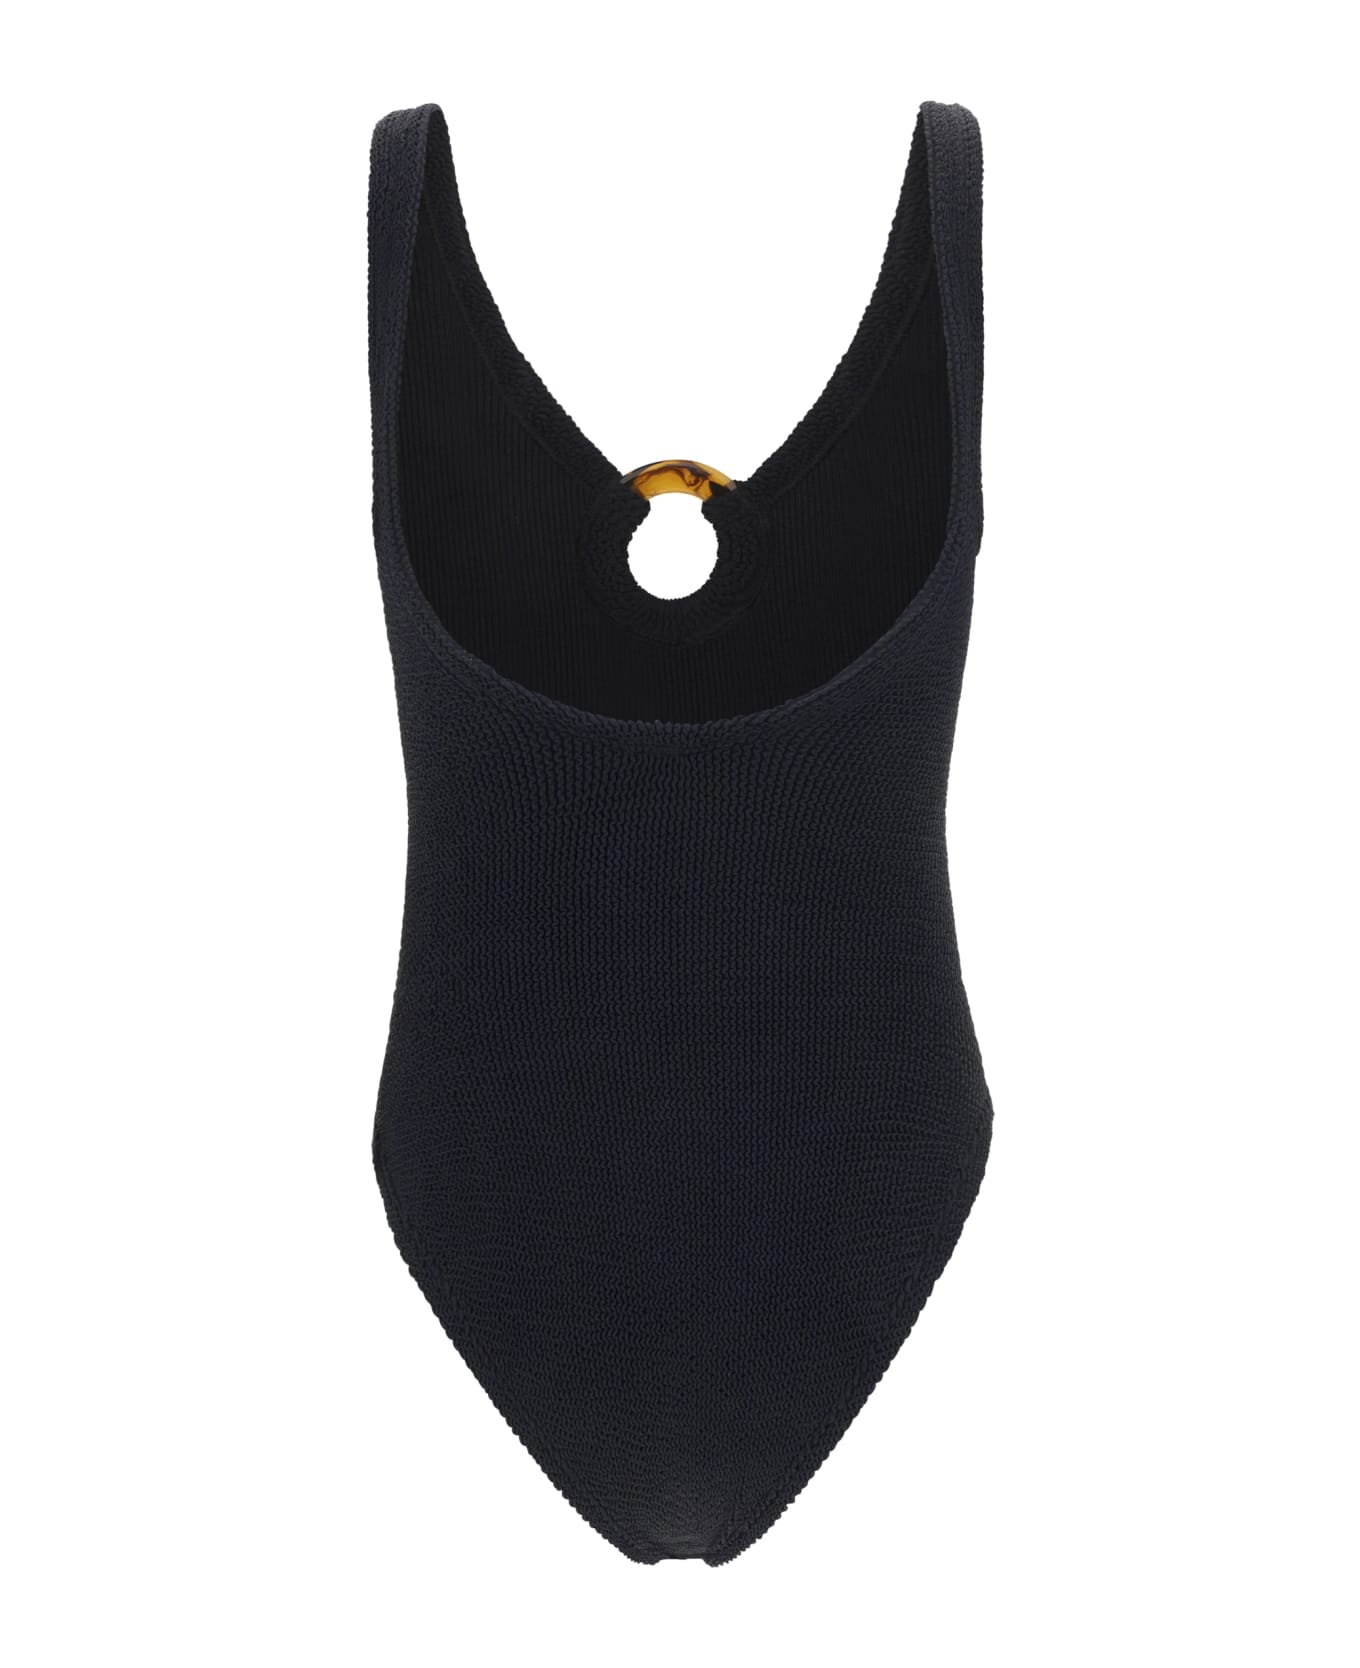 Hunza G Celine Swimsuit - Black